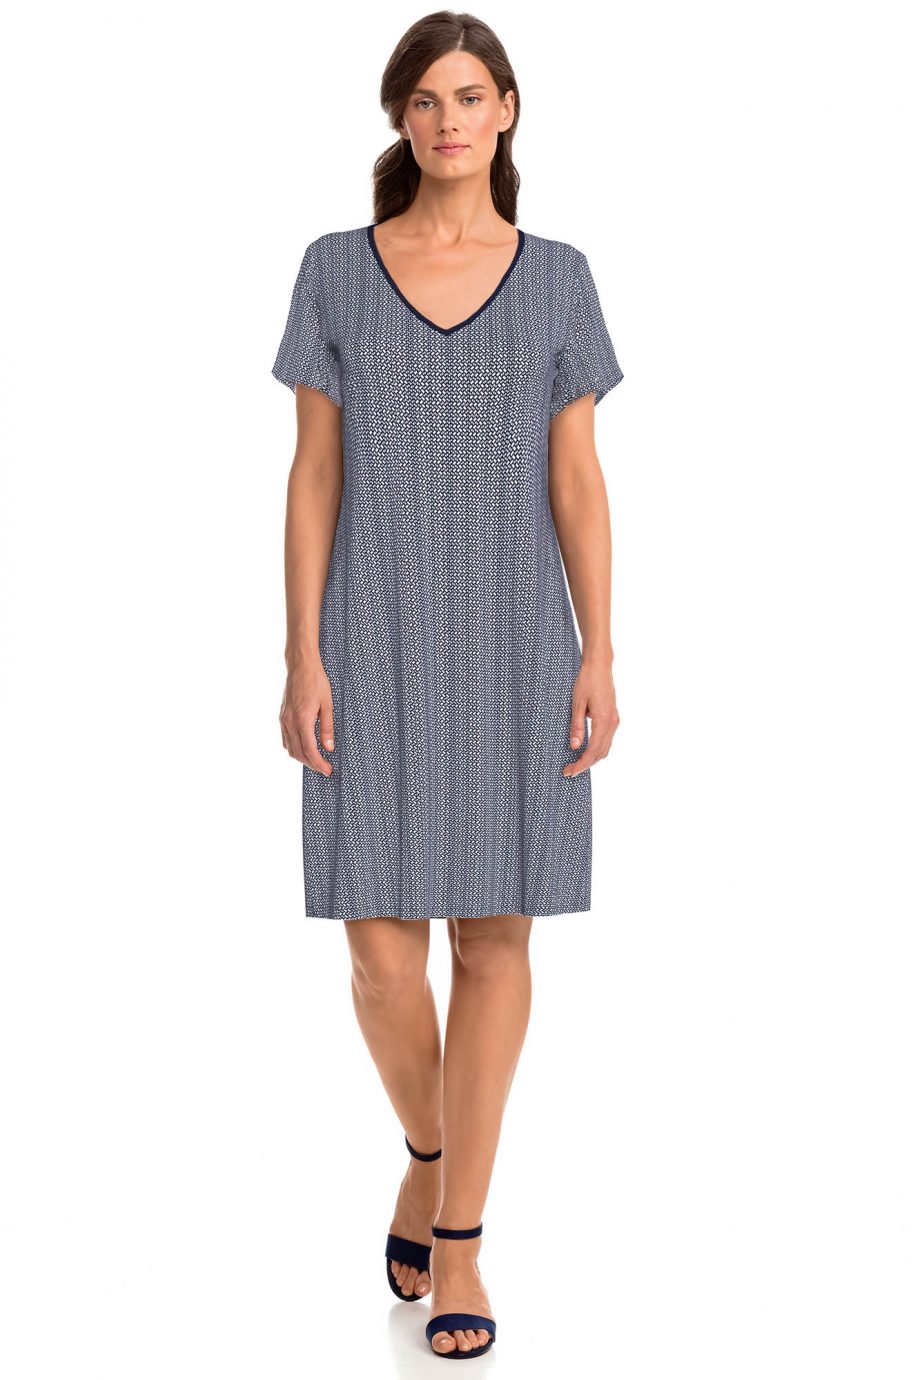 Short Sleeved Printed Dress